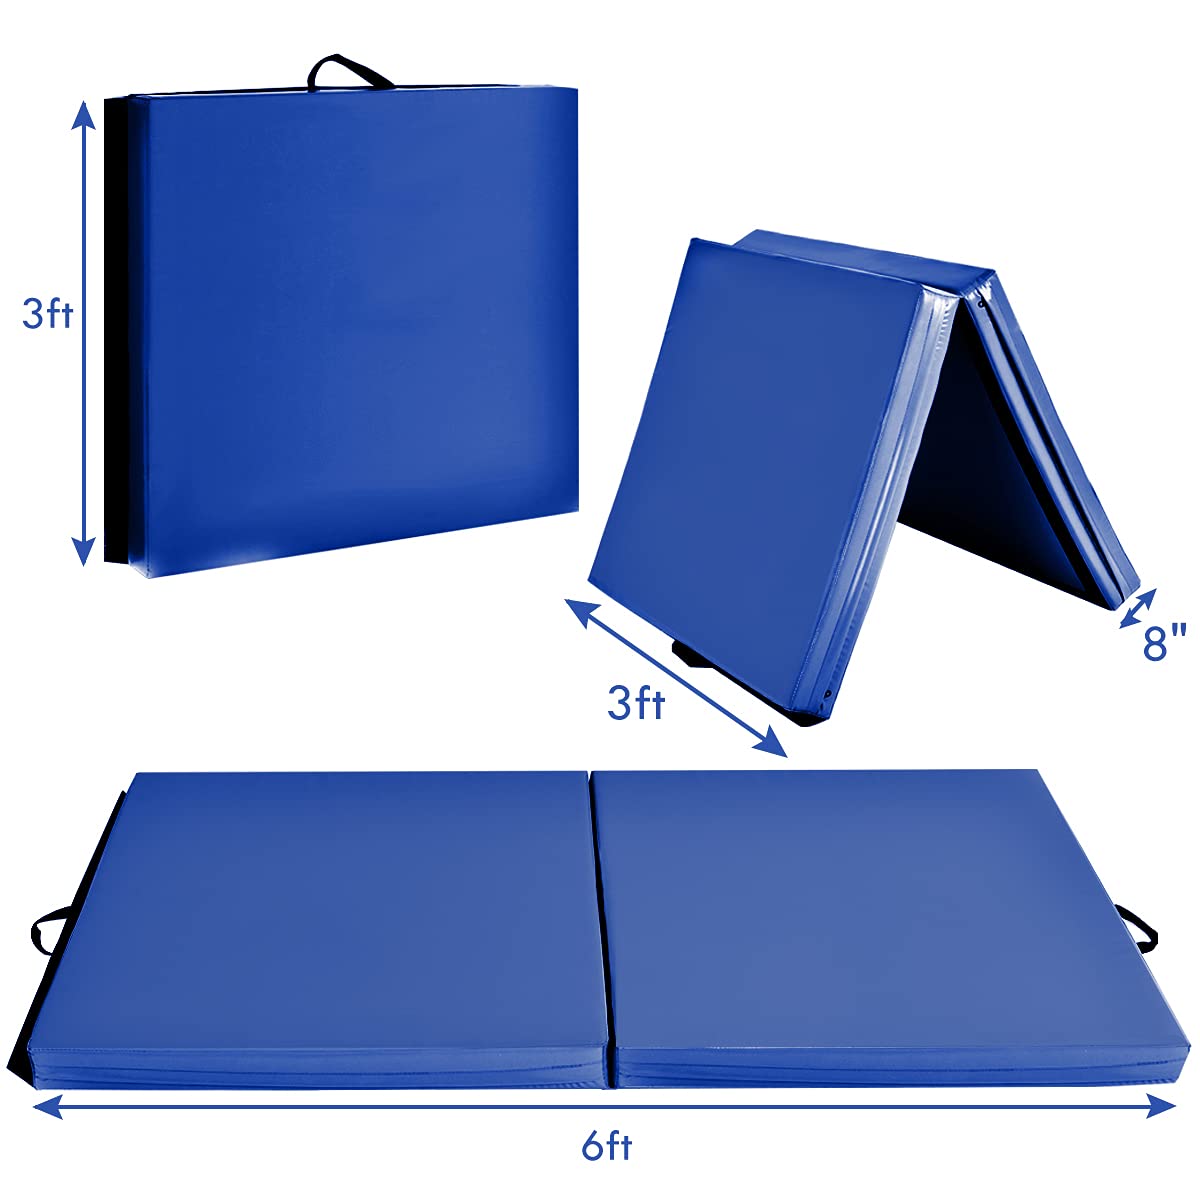 Giantex 6'x 2' Folding Gymnastics Mat, Exercise Mat w/ Carrying Handles, Small Size